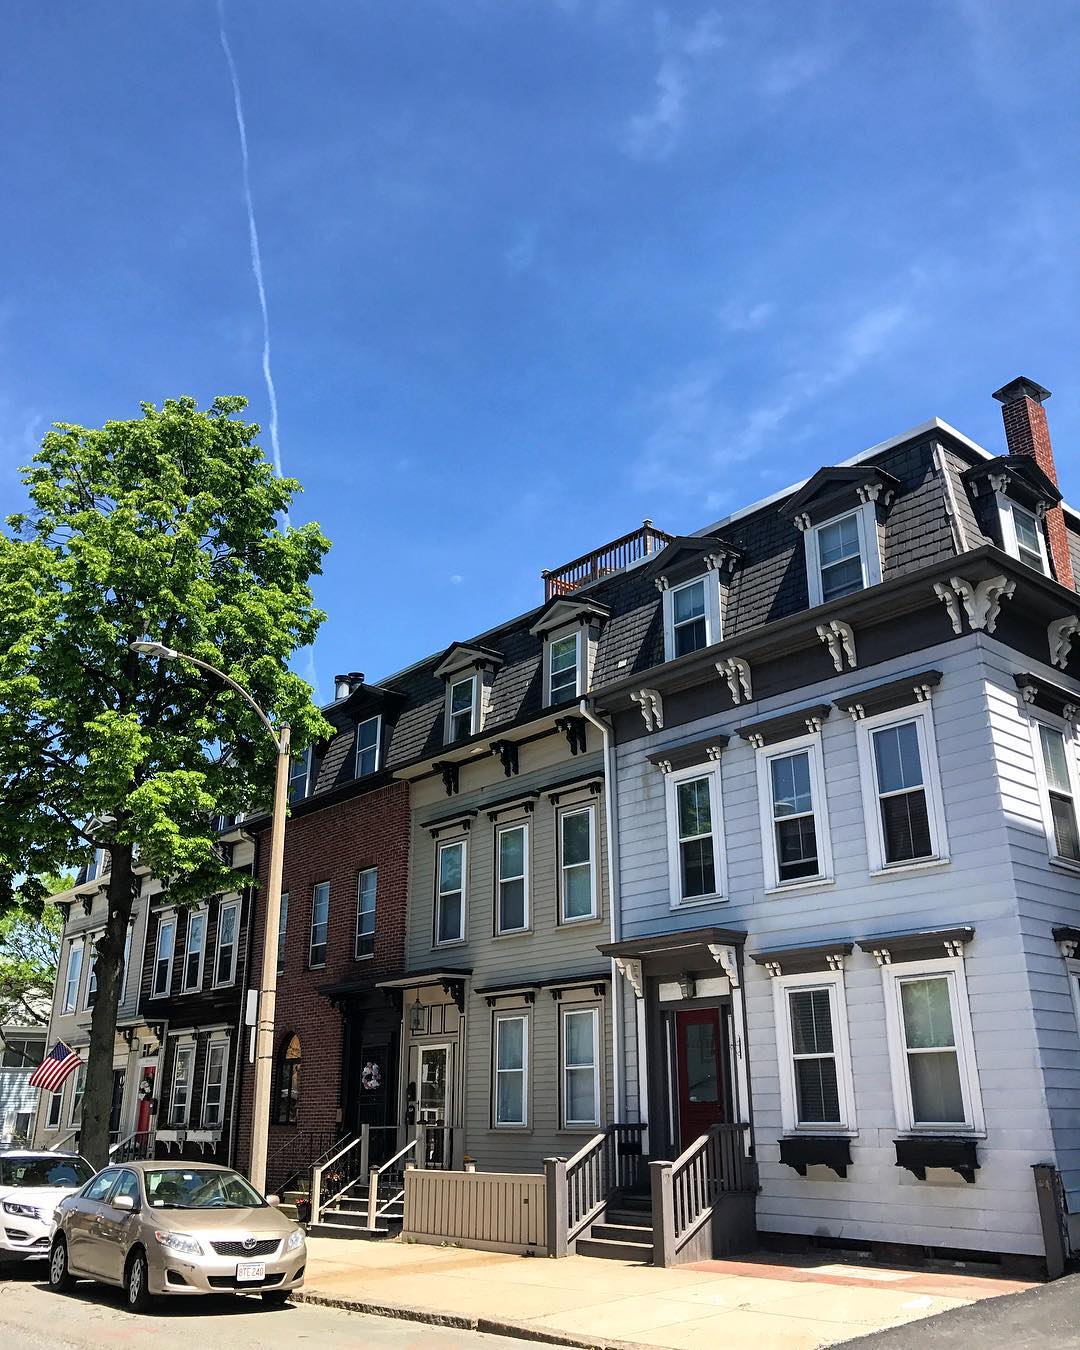 Brownstone homes in East Boston. Photo by Instagram user @elisapandamelie